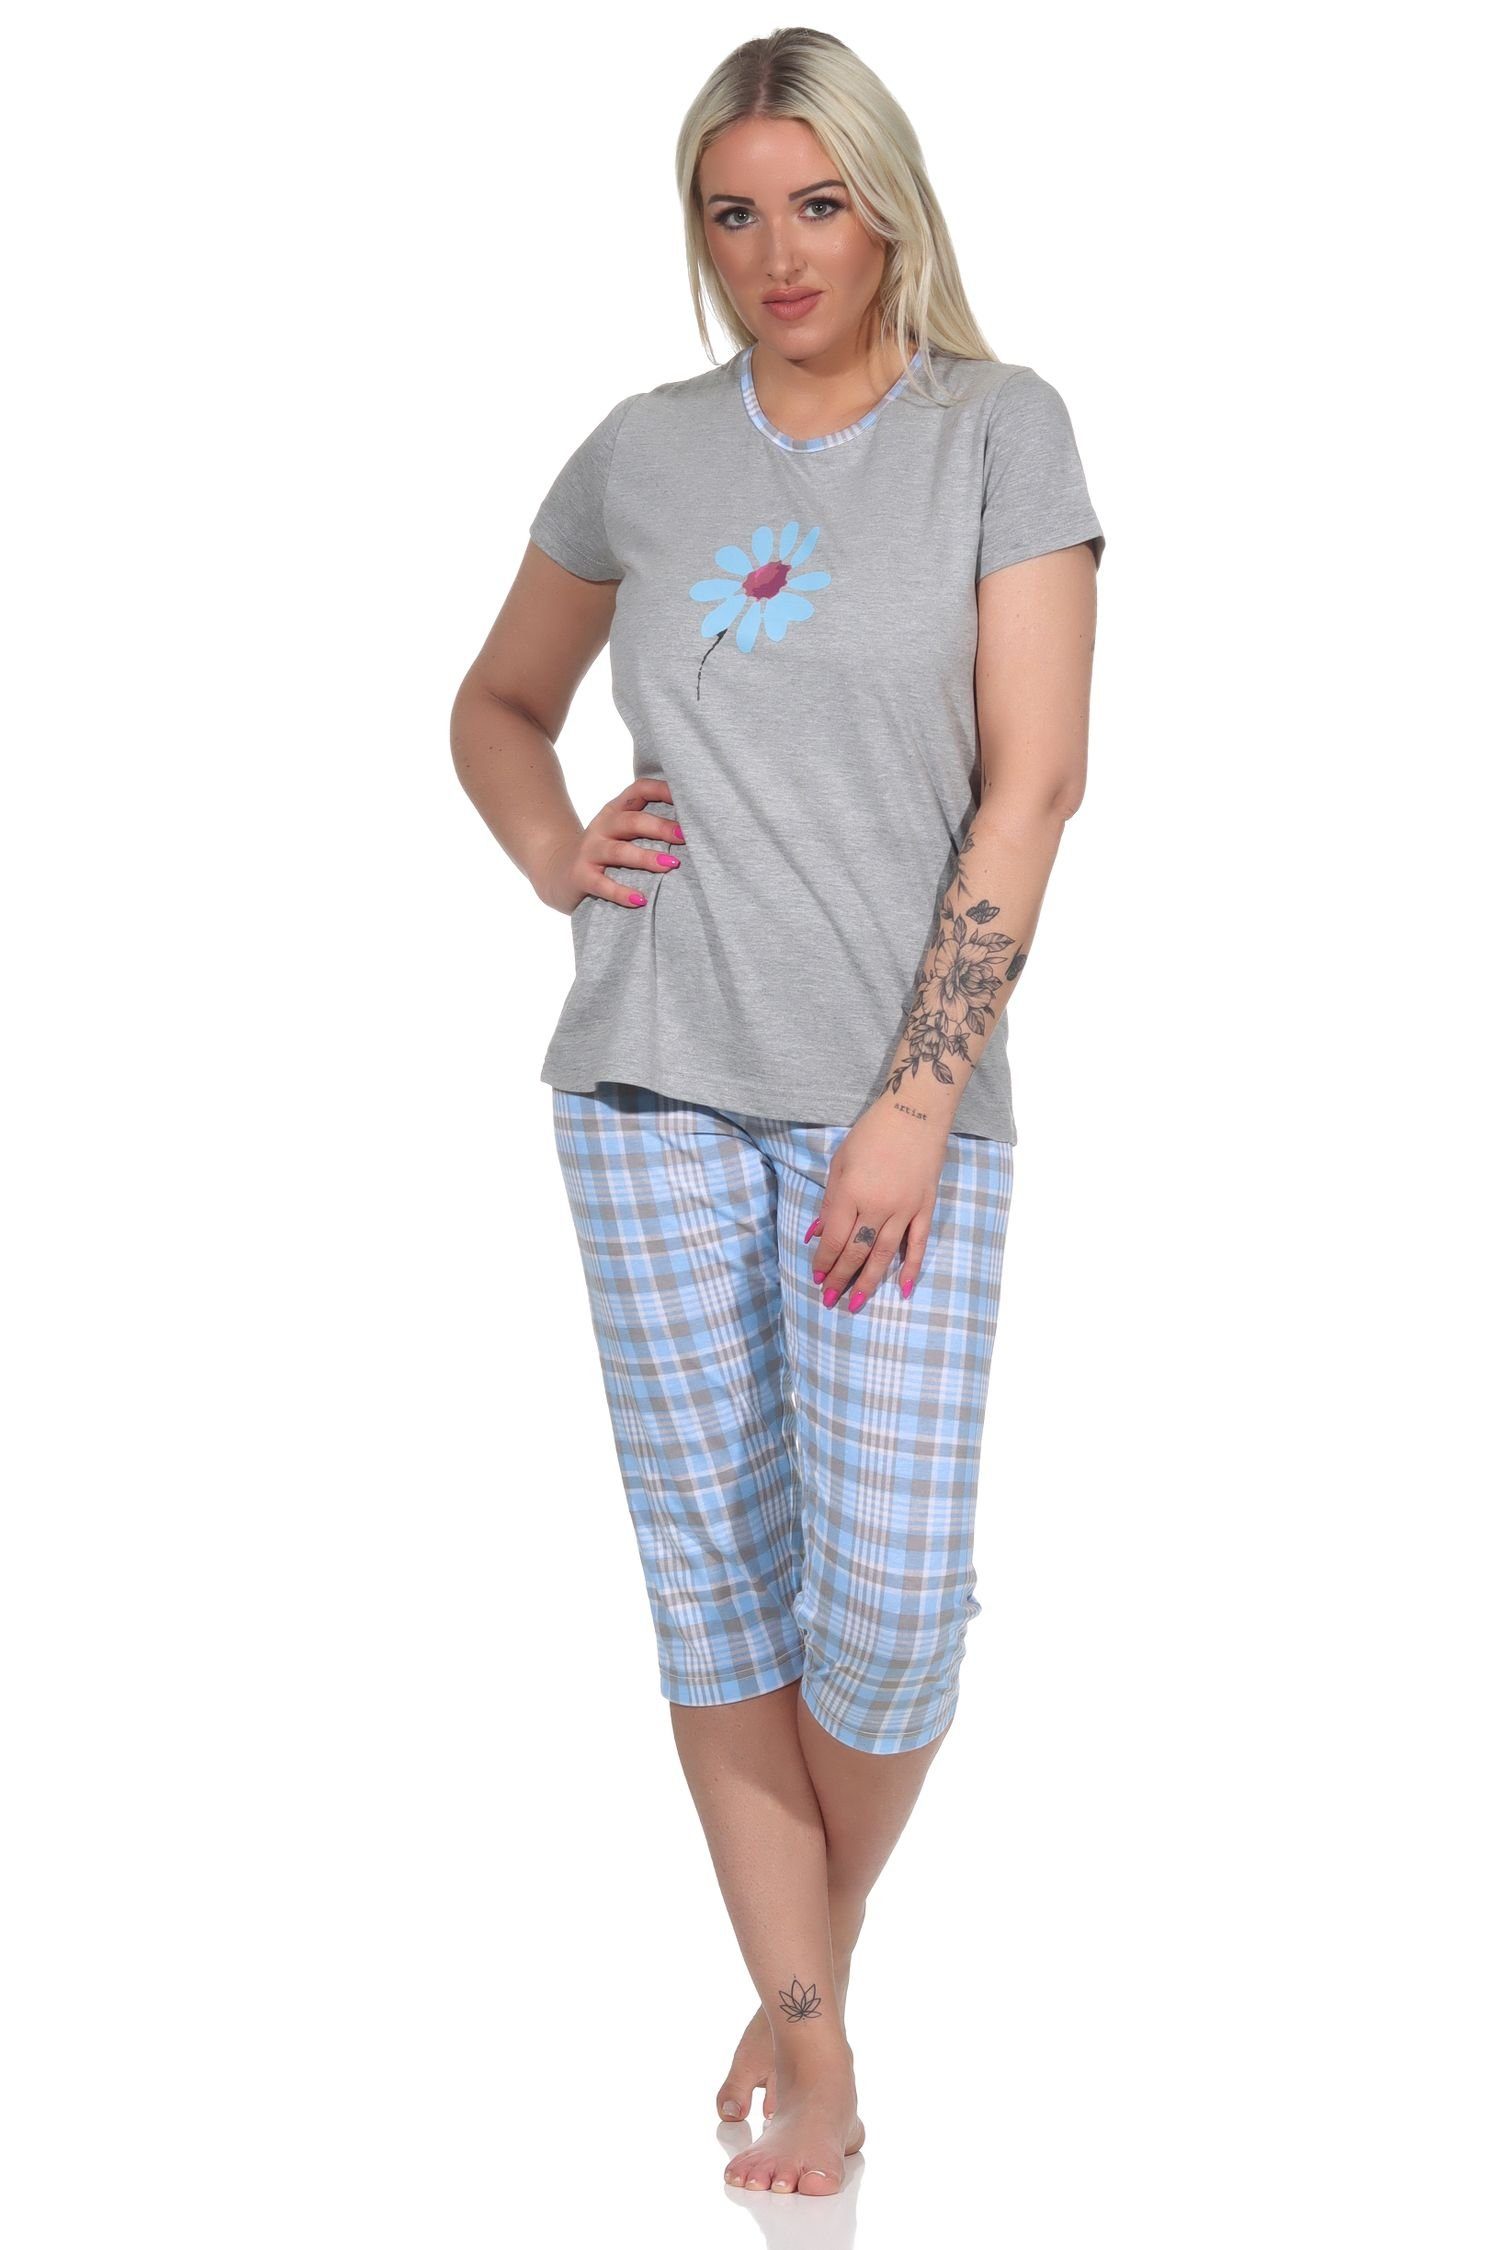 Damen und Caprihose Pyjama Front-Print Pyjama Karo Schlafanzug Capri mit Normann